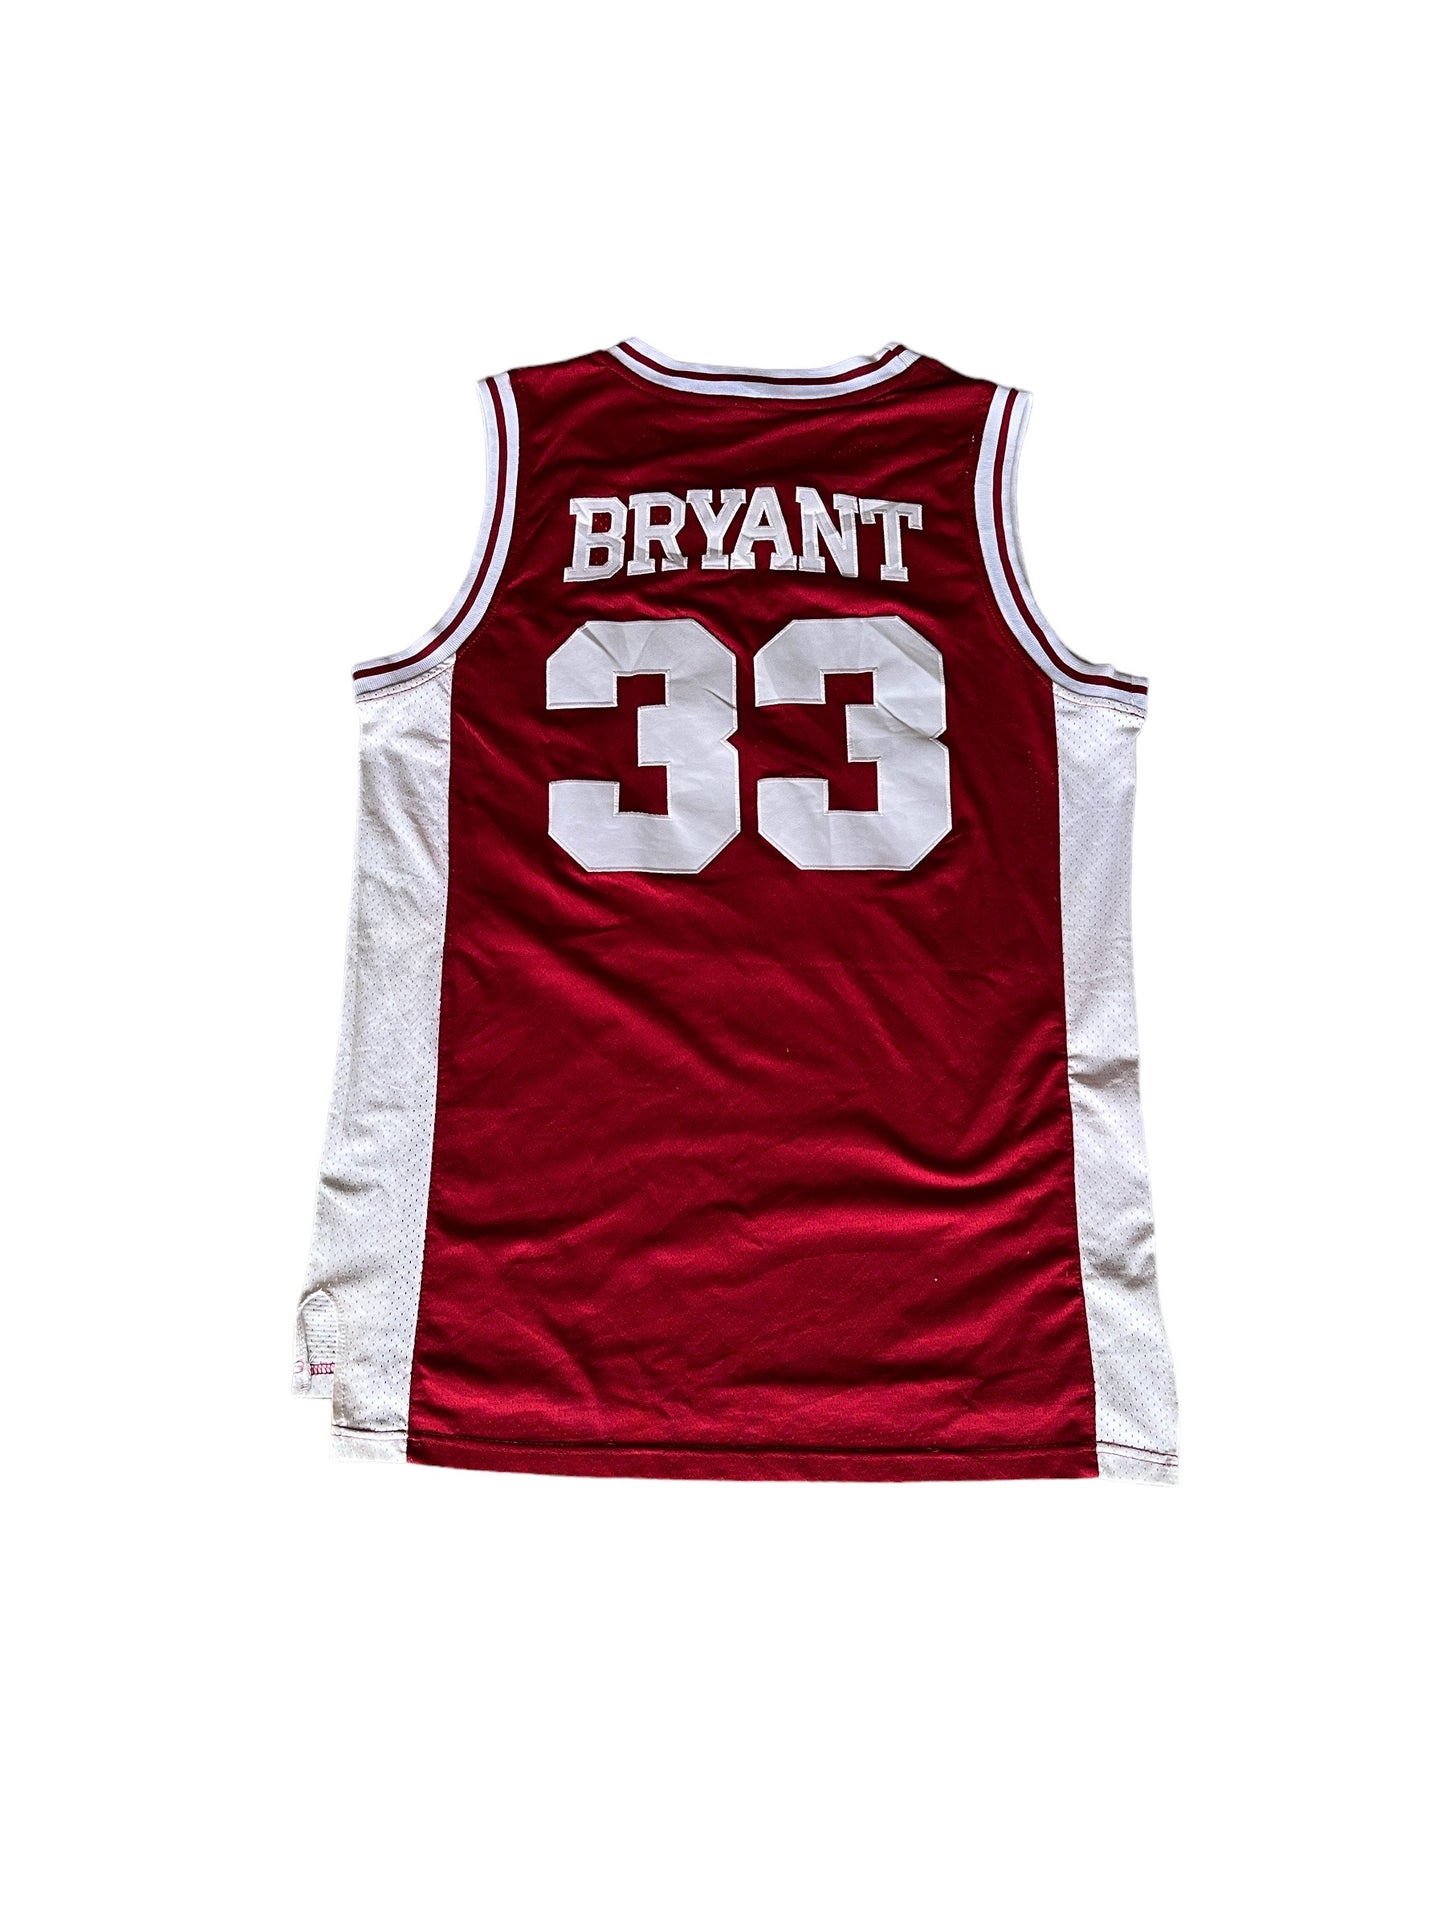 Nike Lower Merion High School 1996 "Kobe Bryant" Jersey